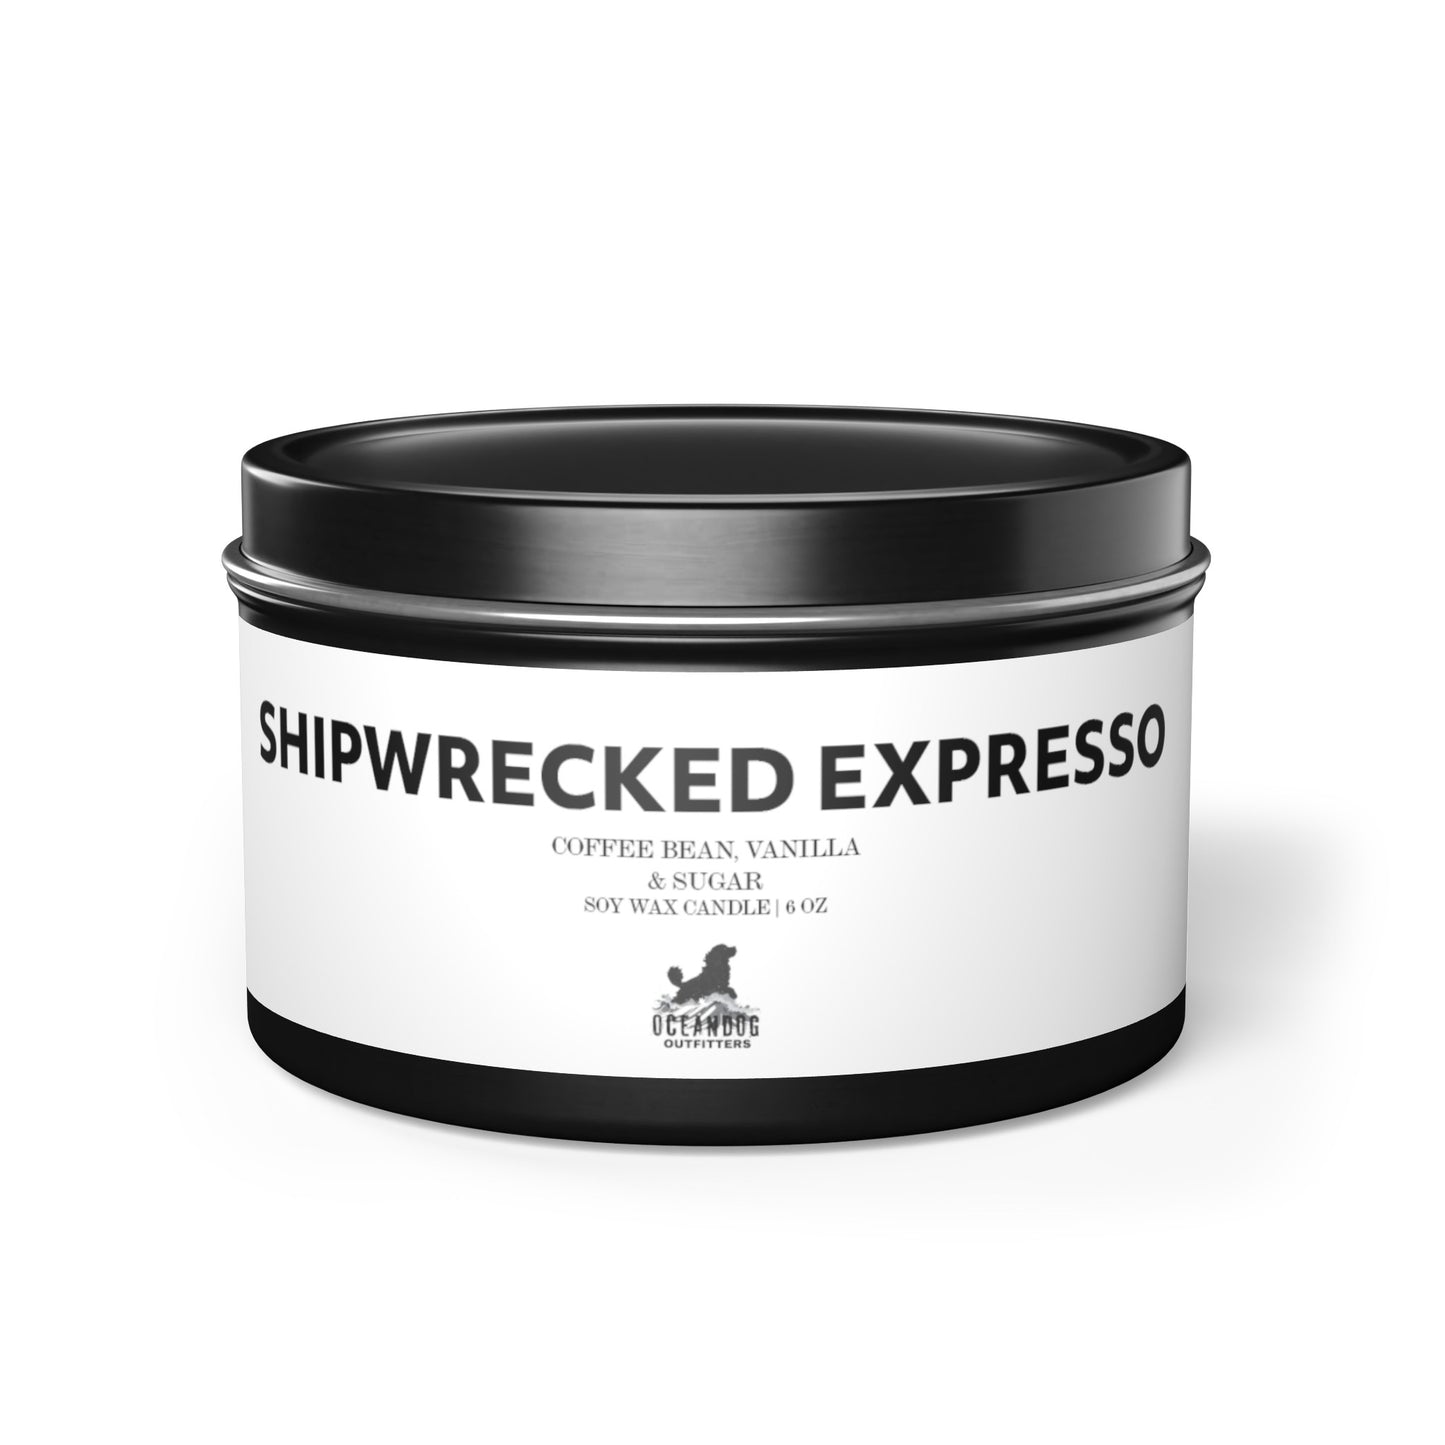 SHIPWRECKED EXPRESSO